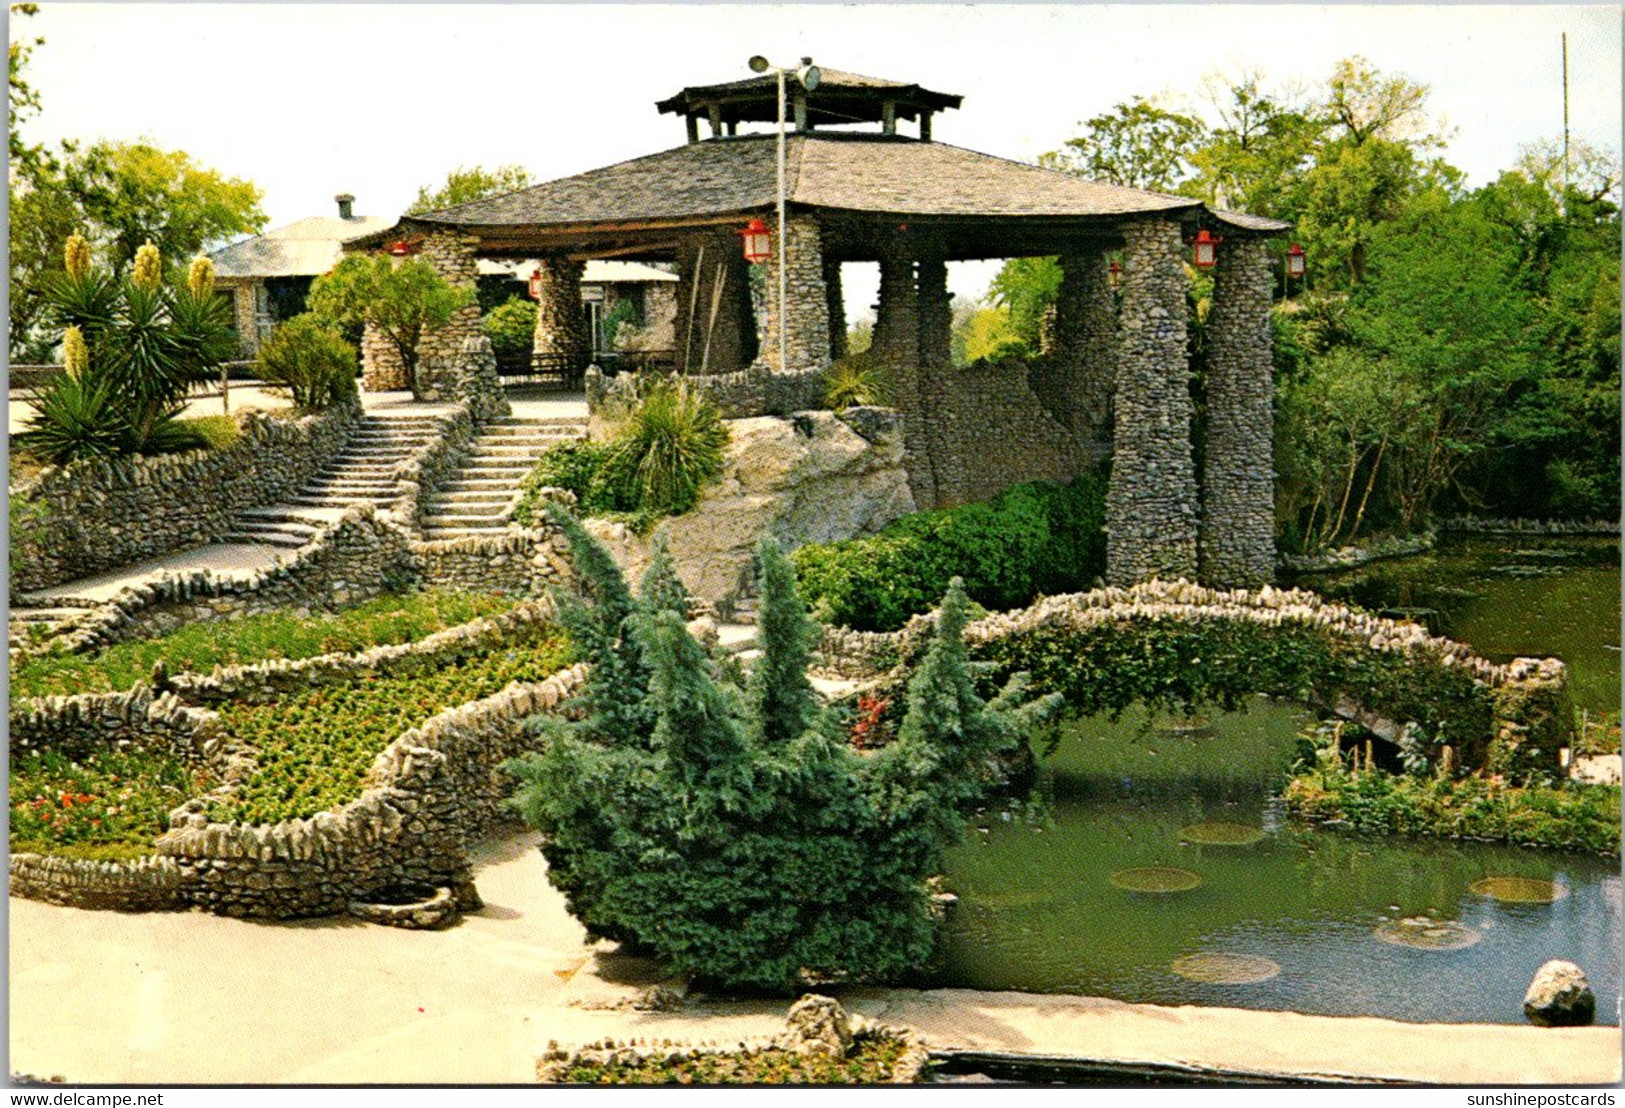 Texasan Antonio Sunken Gardens Showing The Pagoda Or Tea House - San Antonio